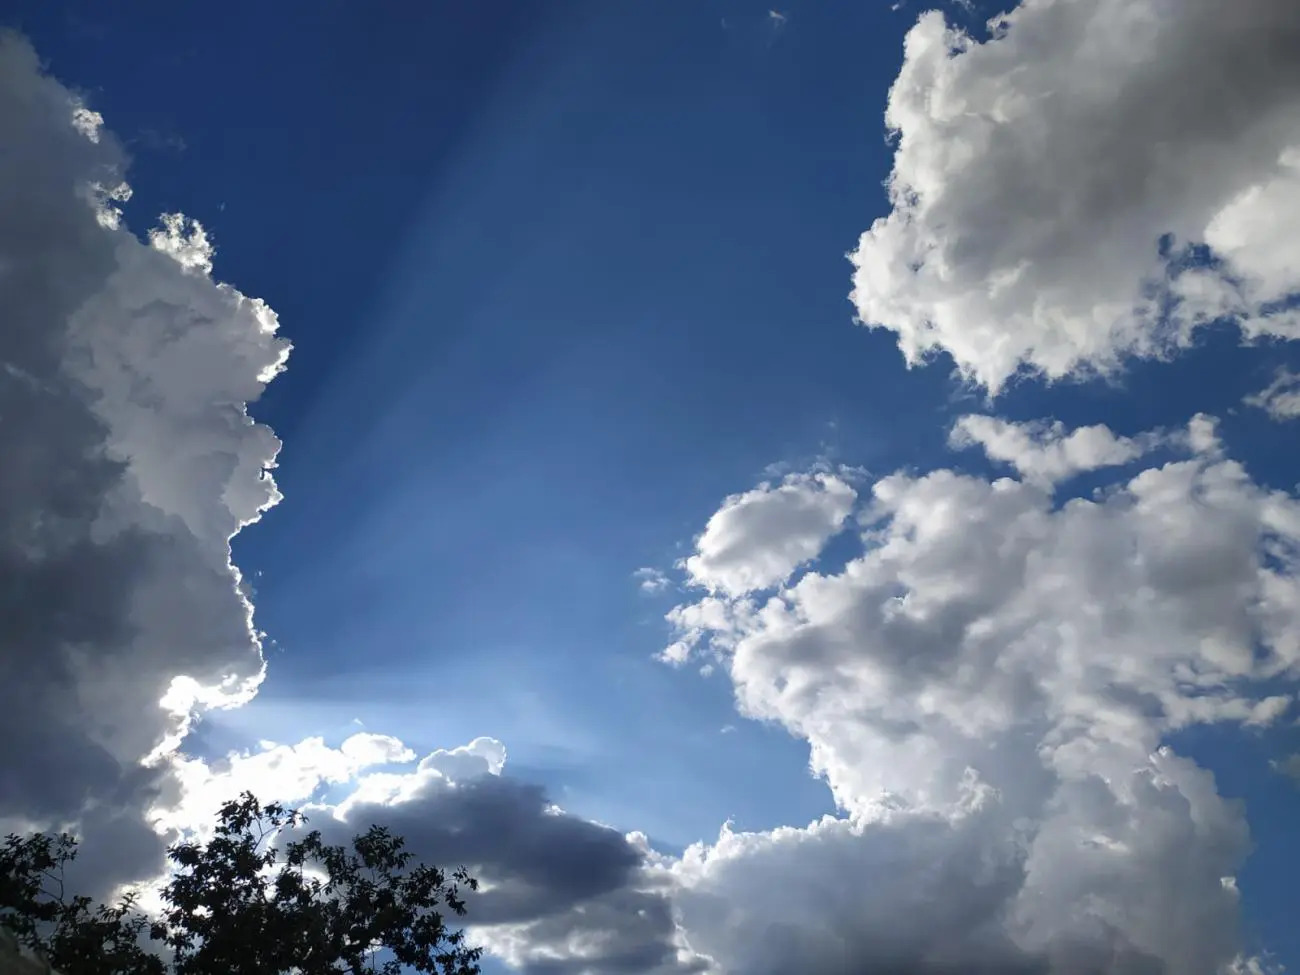 https://radiomarconi.net/wp-content/uploads/2022/12/sol-nuvens-nublado-calor-verao-chuva6-Foto-Ana-Paula-Wilmsen-OP.jpg.jpg